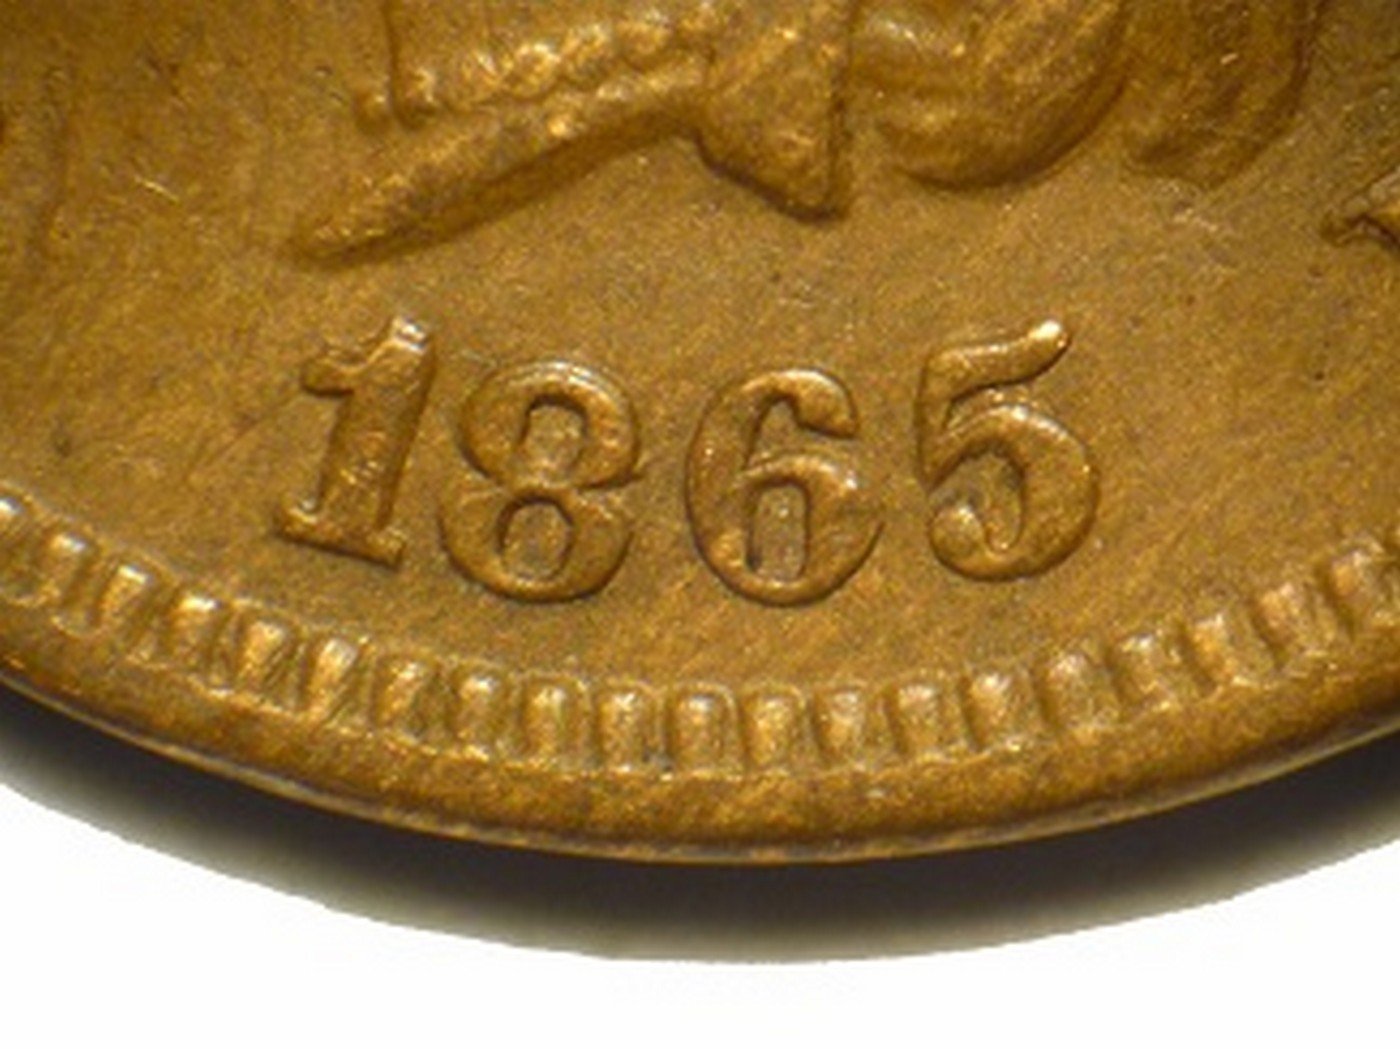 1865 Plain 5 RPD-004 - Indian Head Penny - Photo by David Poliquin